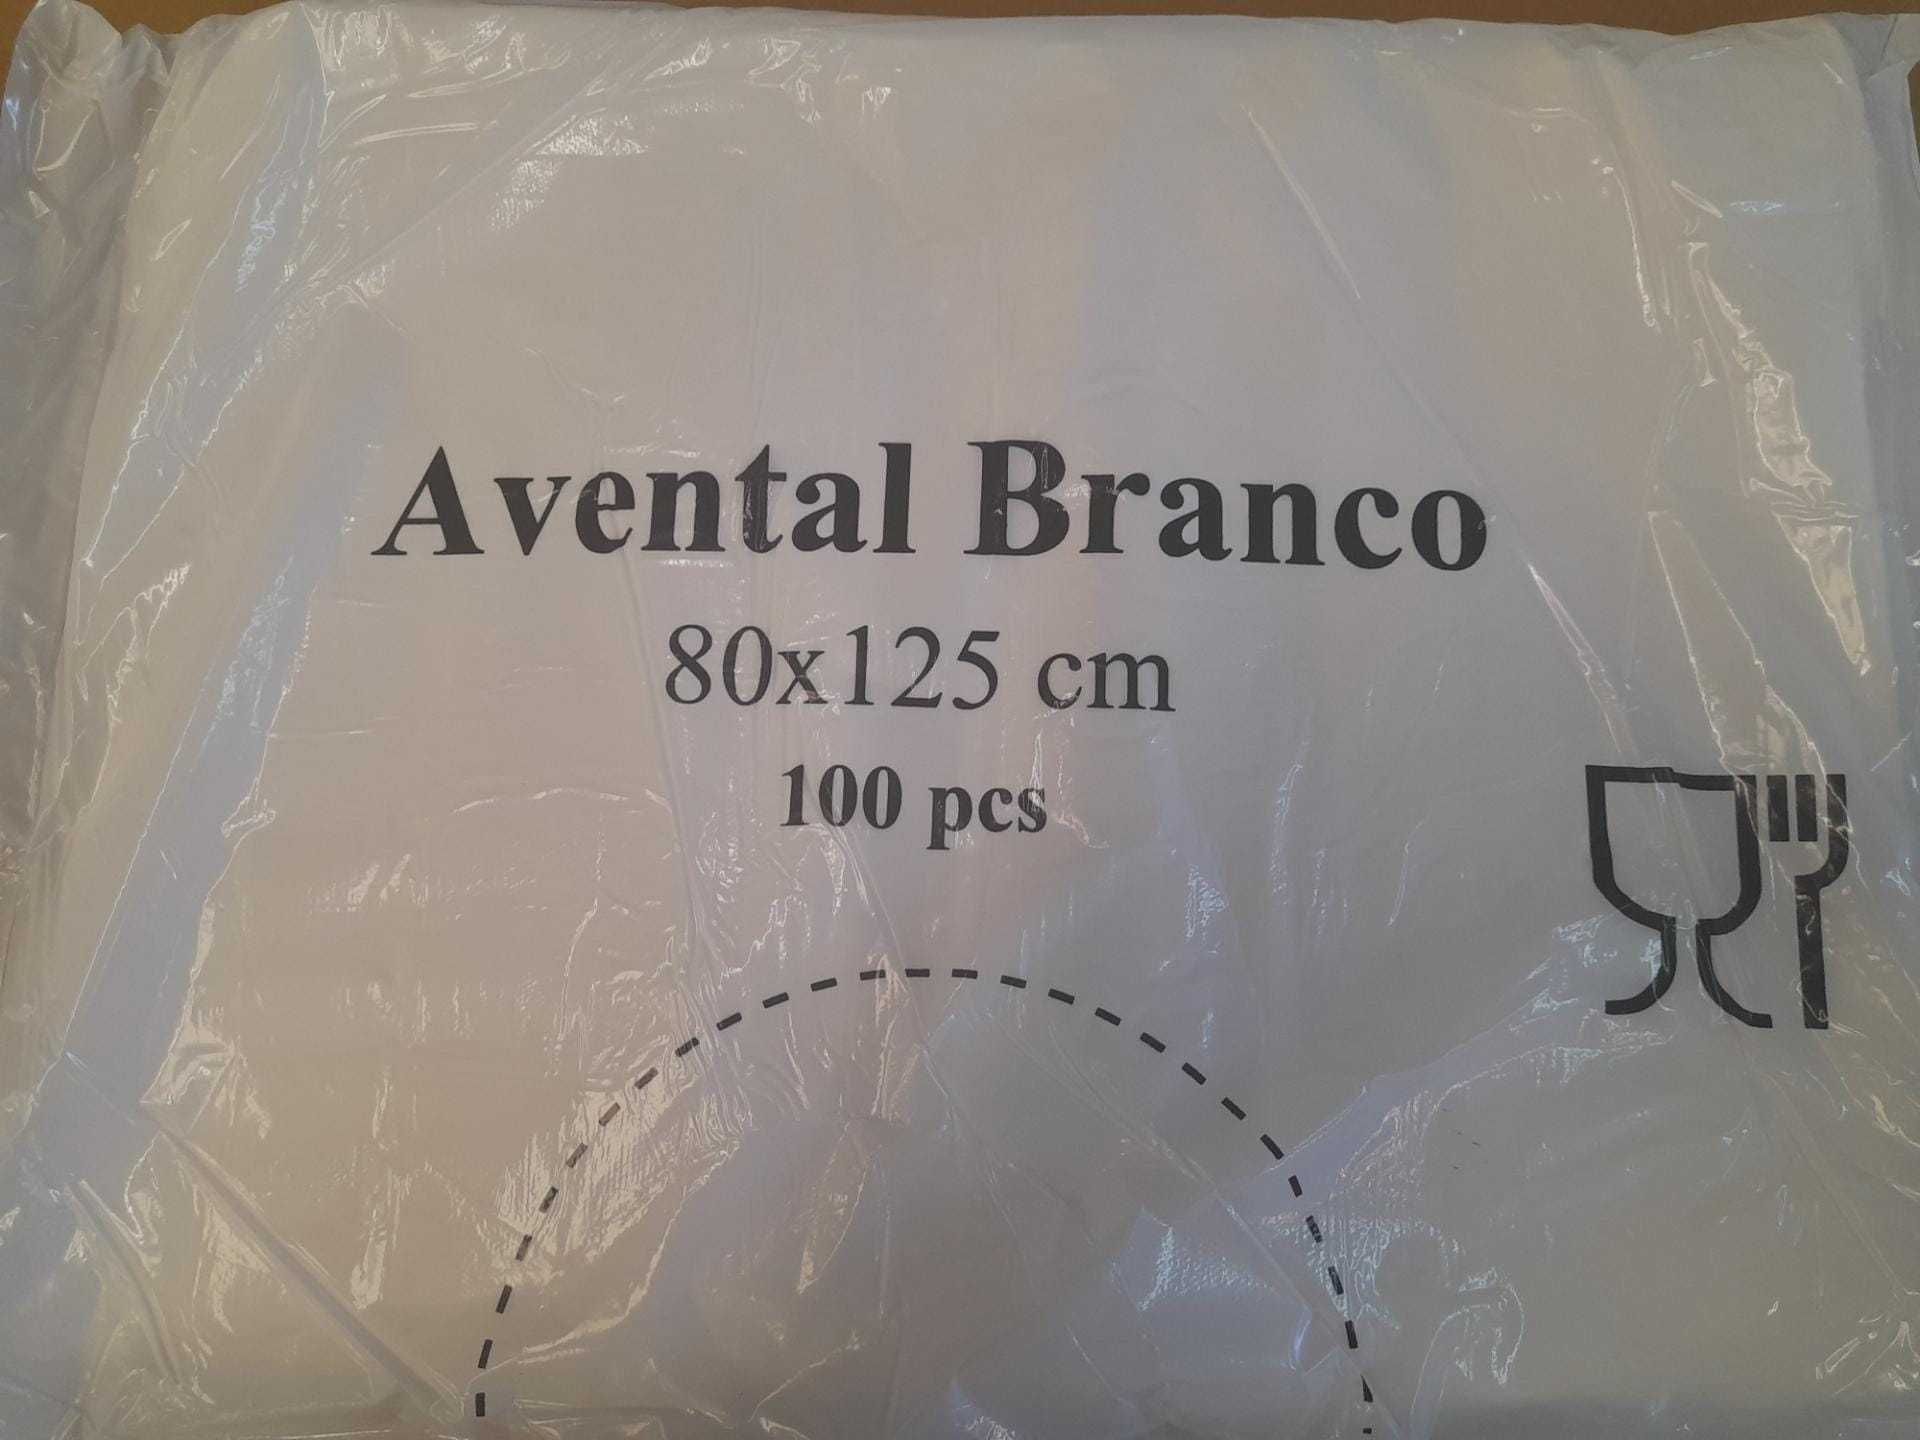 Avental descartável - 2,80 € por pack de 100 unidades